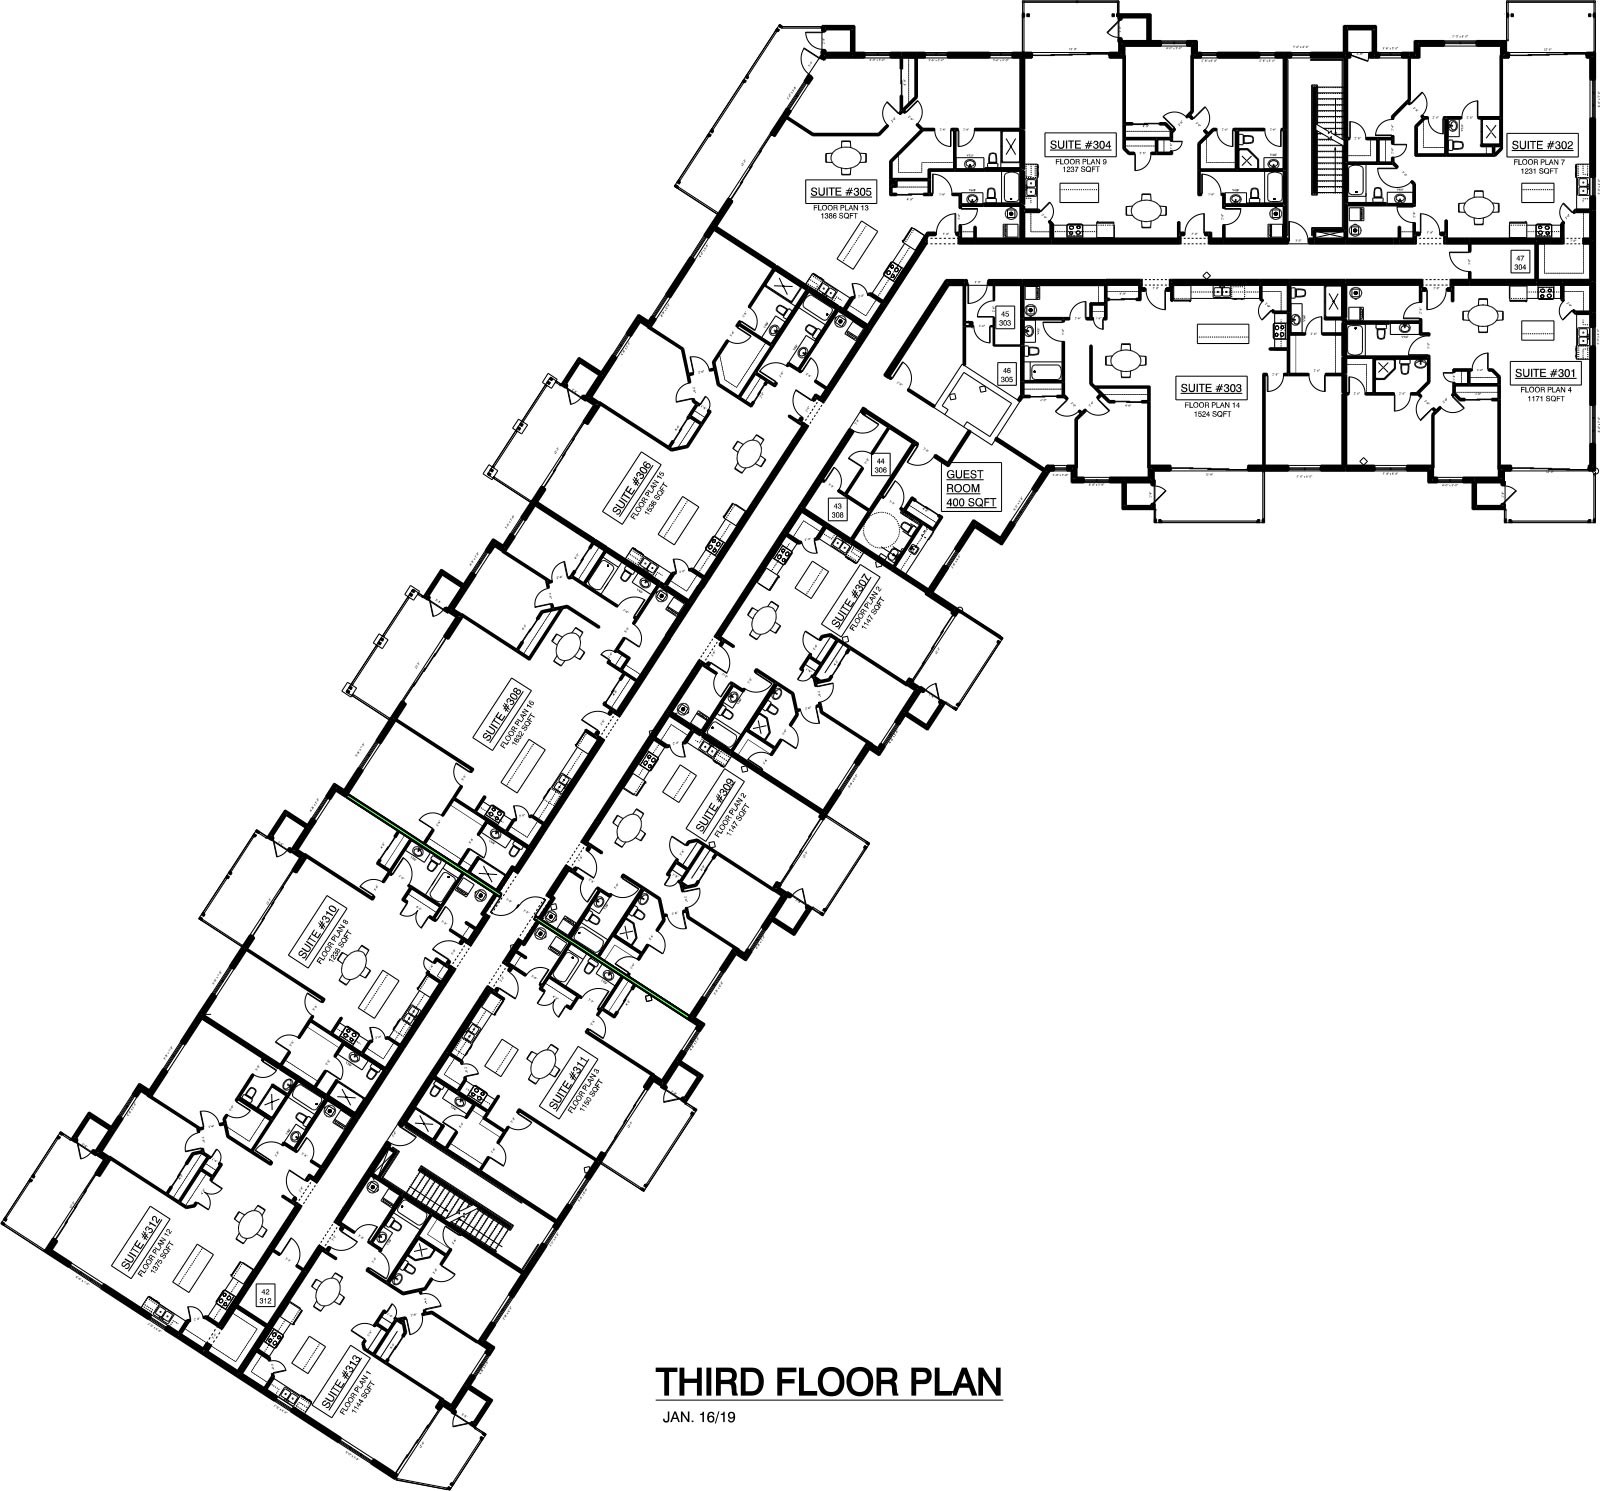 Suite Location Plan Redview Terrace